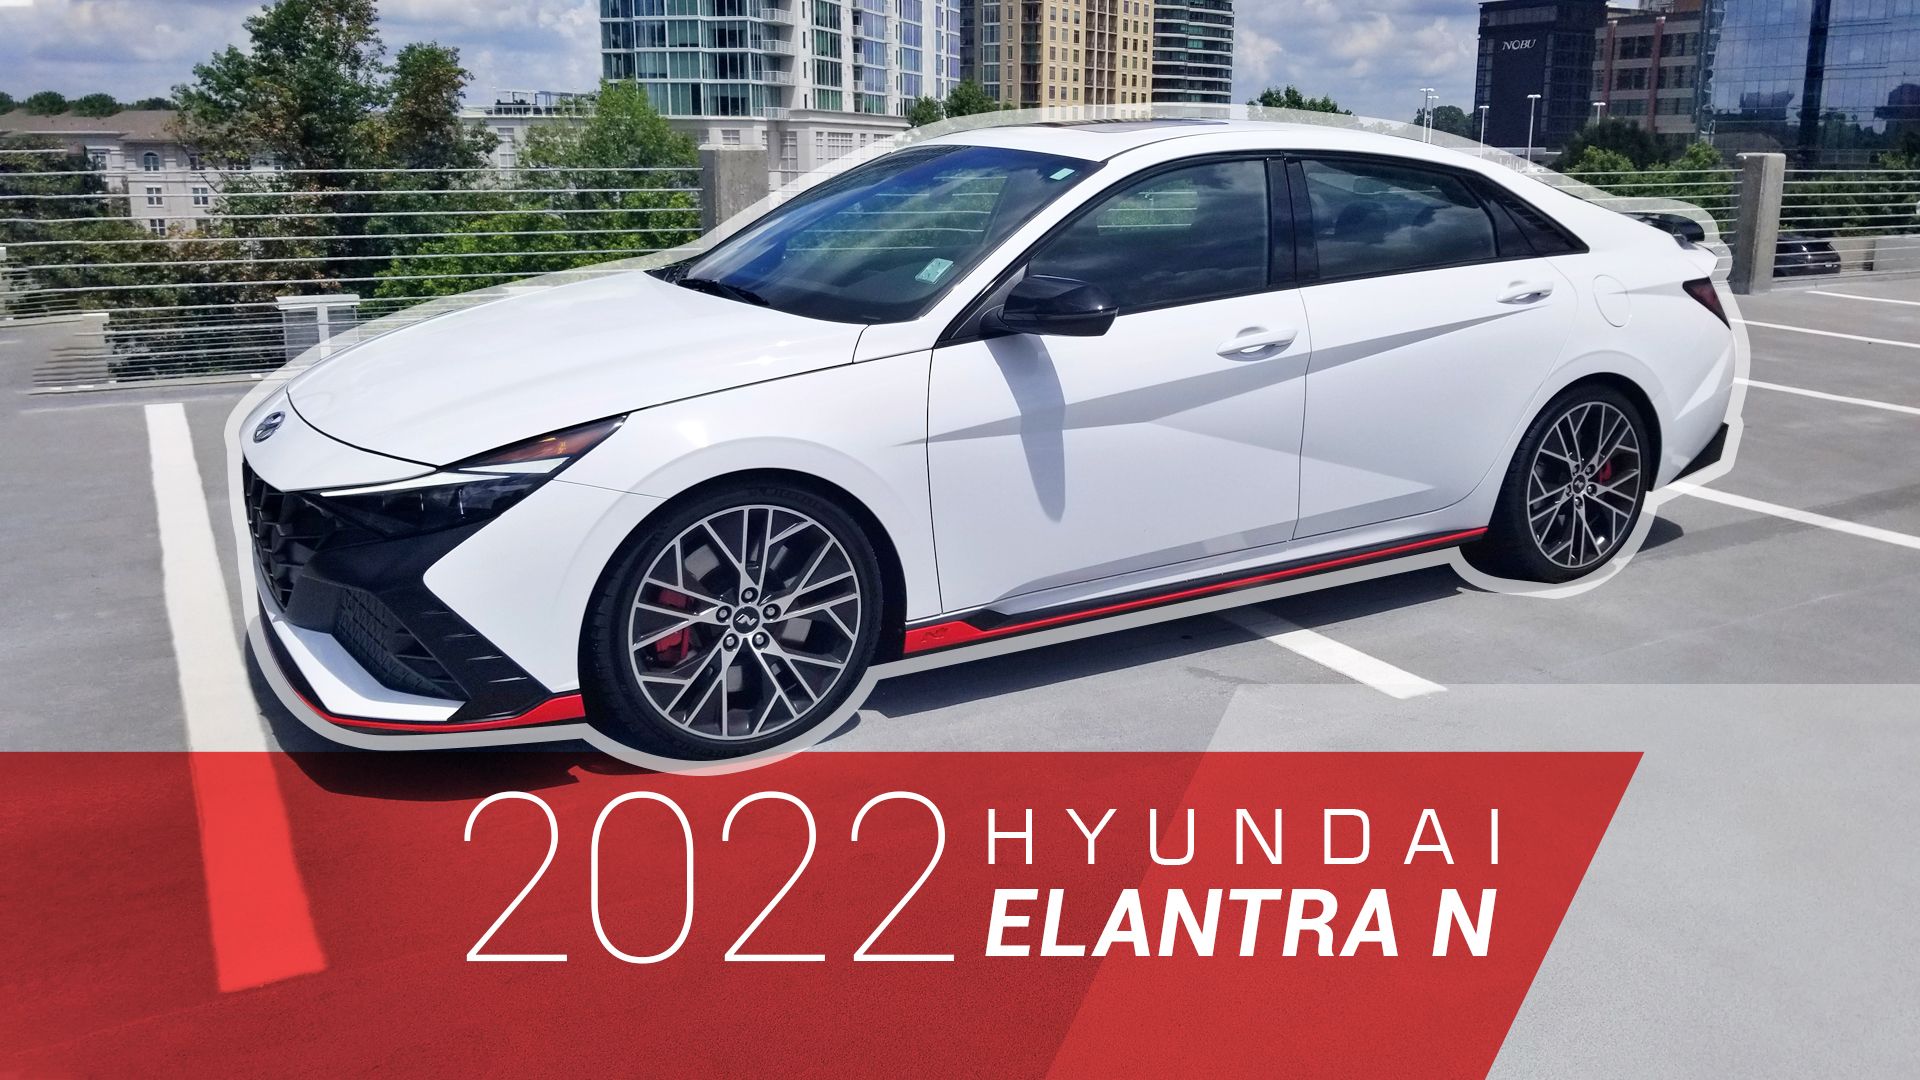 2023 2022 Hyundai Elantra N: Serious Thrills In A Small Package 